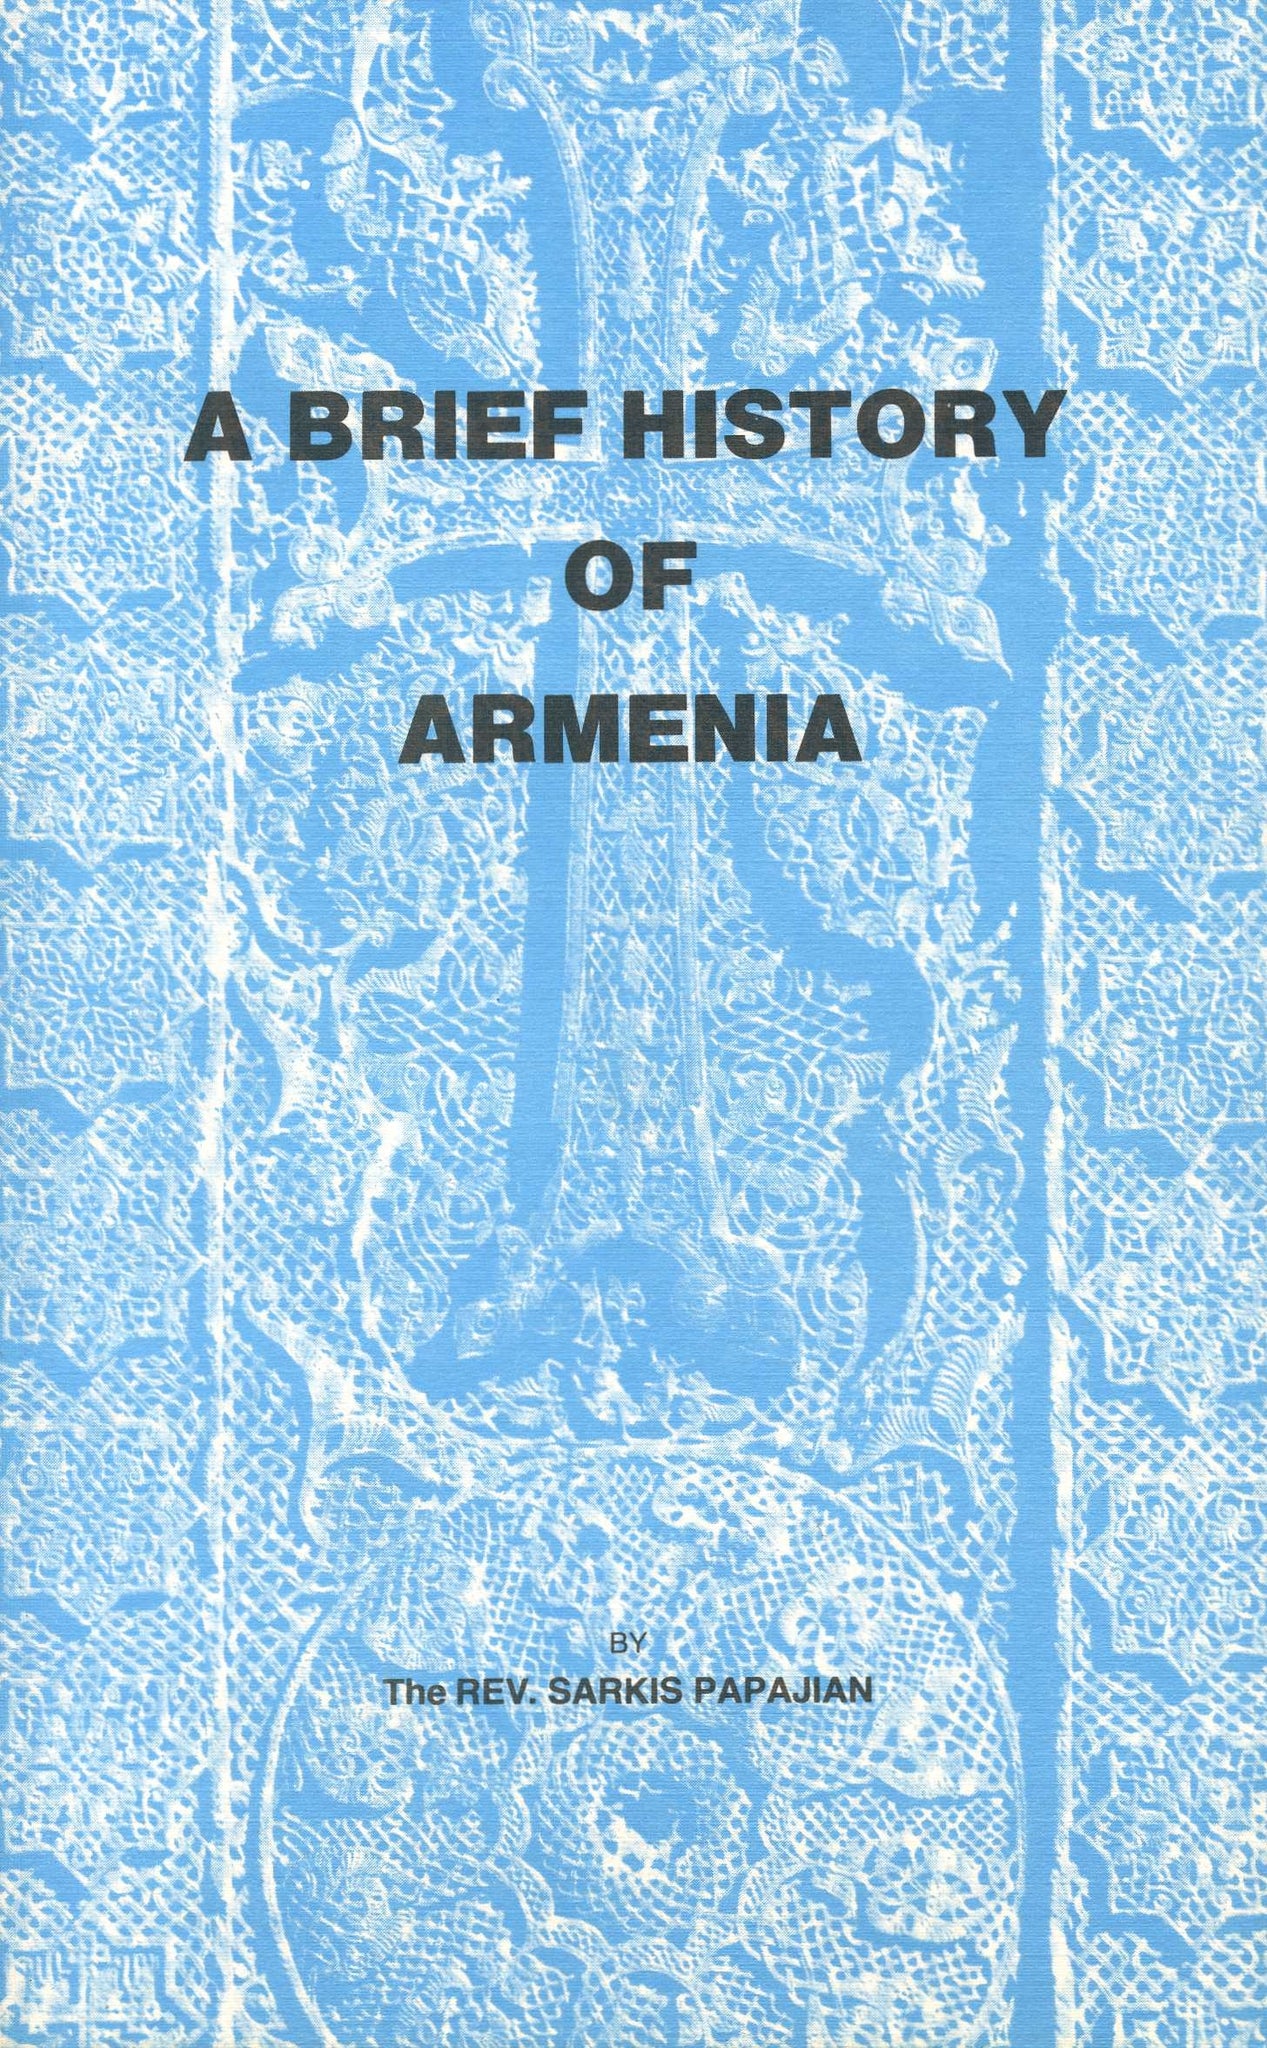 BRIEF HISTORY OF ARMENIA, A